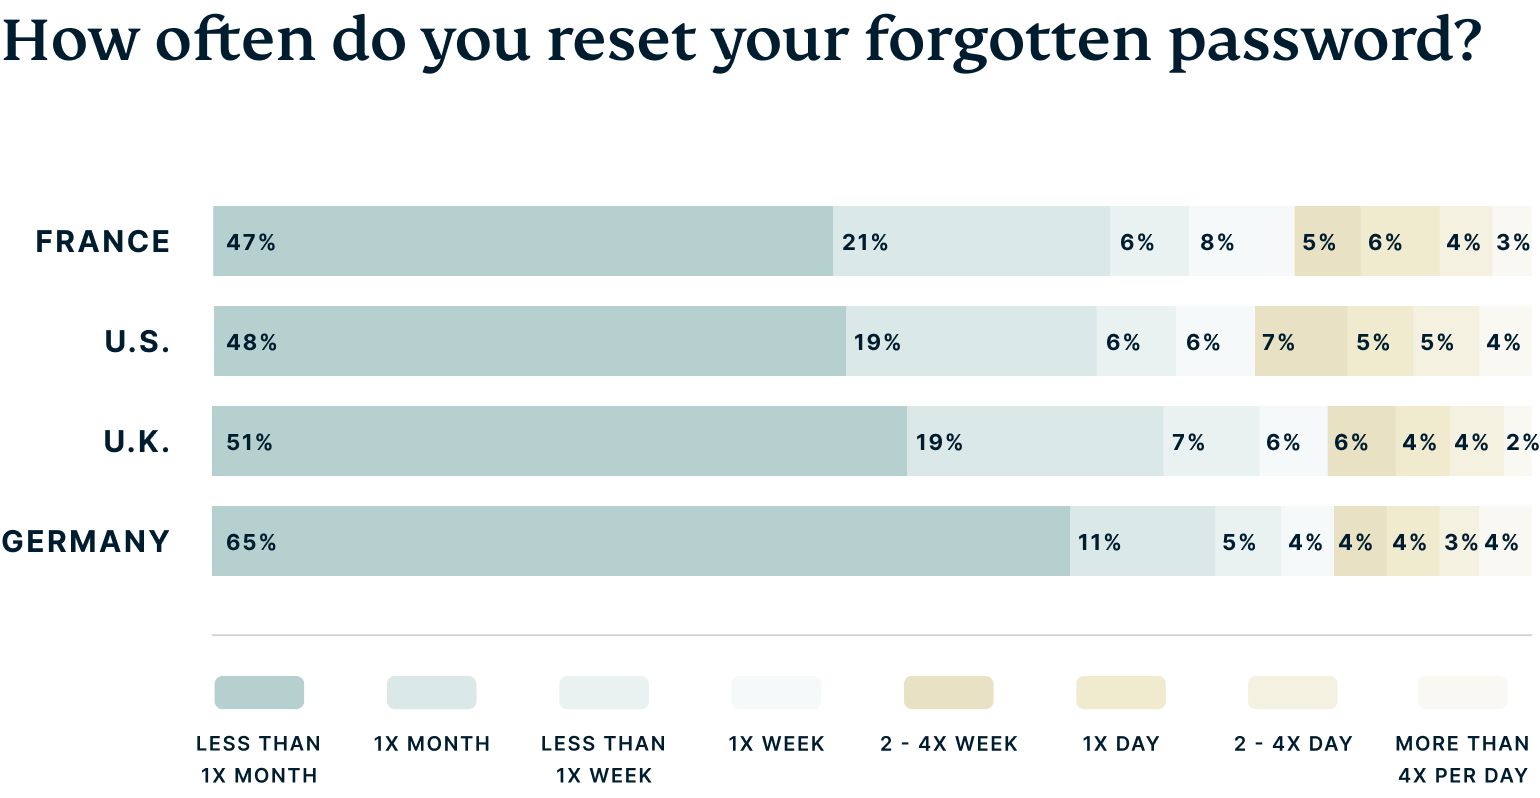 Chart showing how often respondent reset their passwords